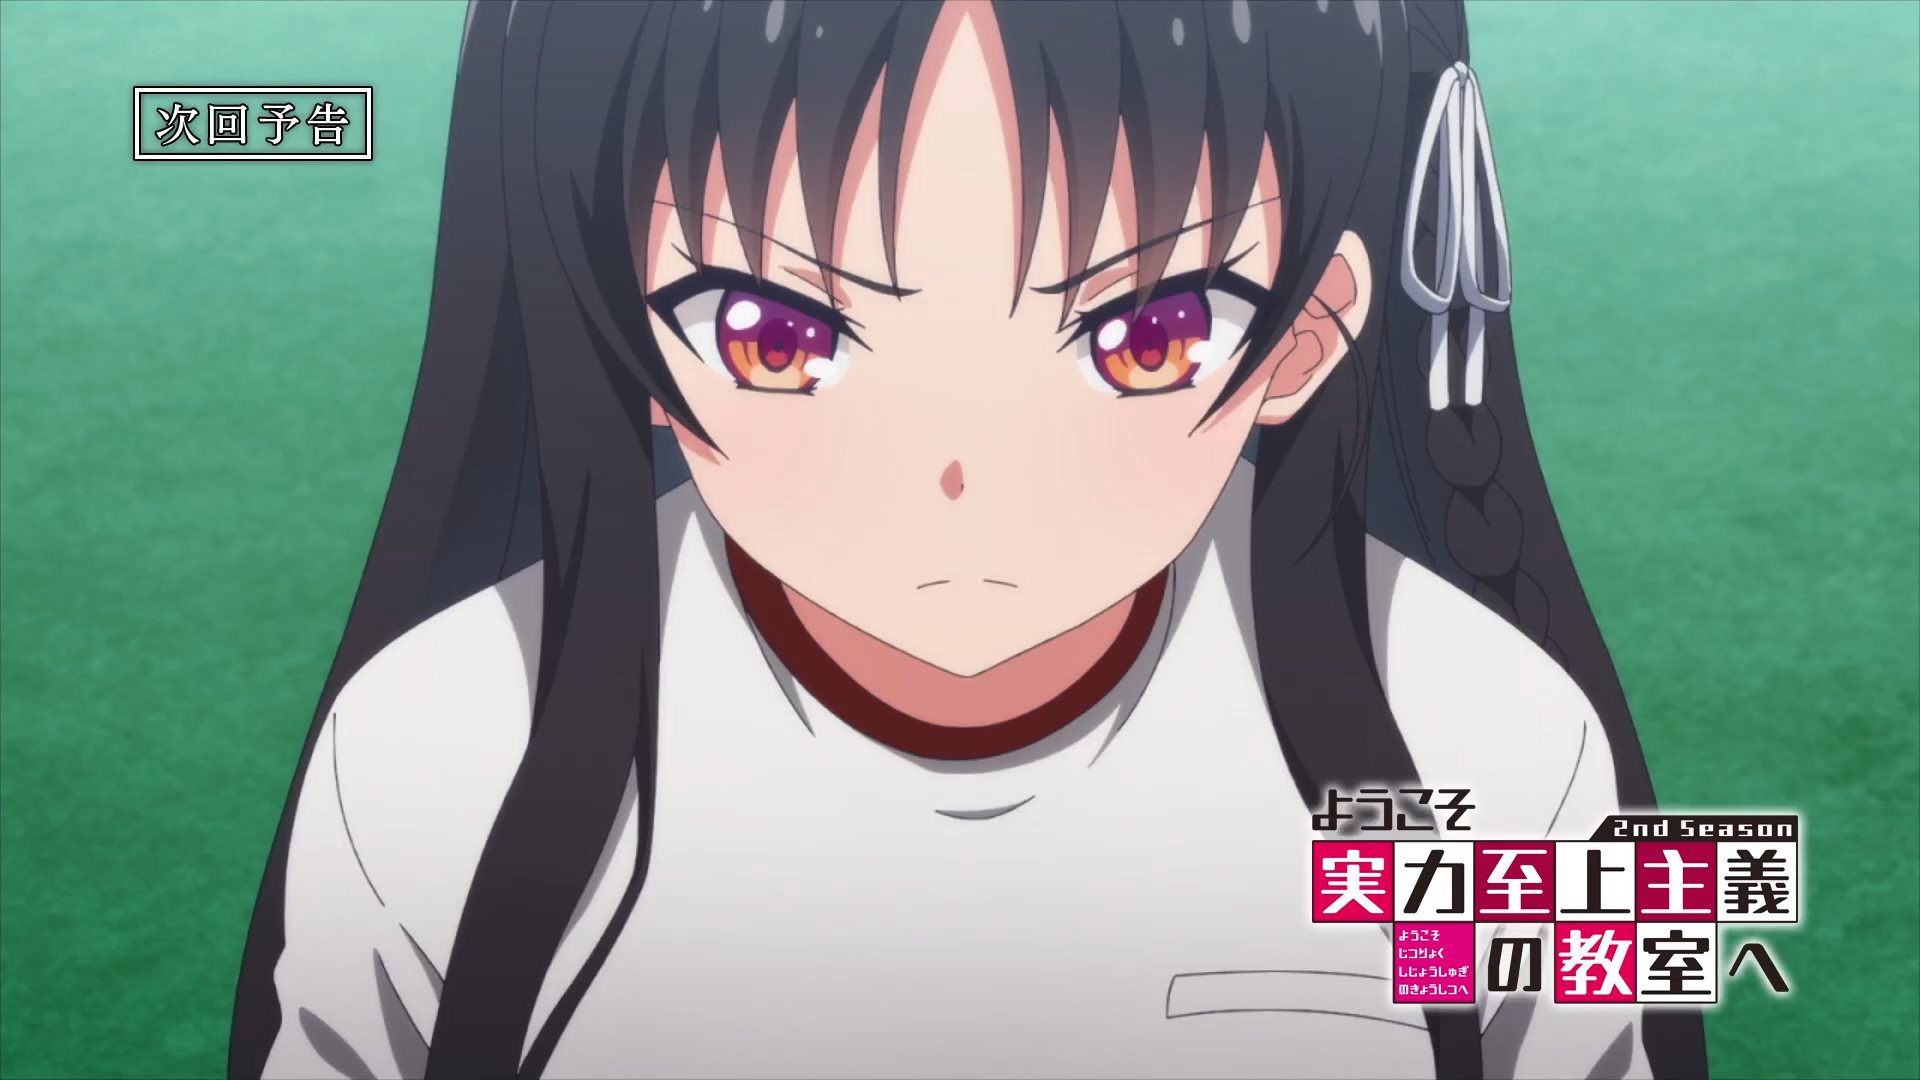 Classroom of the Elite Season 2 Episode 6: Ayanokoji Tries a Bit Harder -  Anime Corner